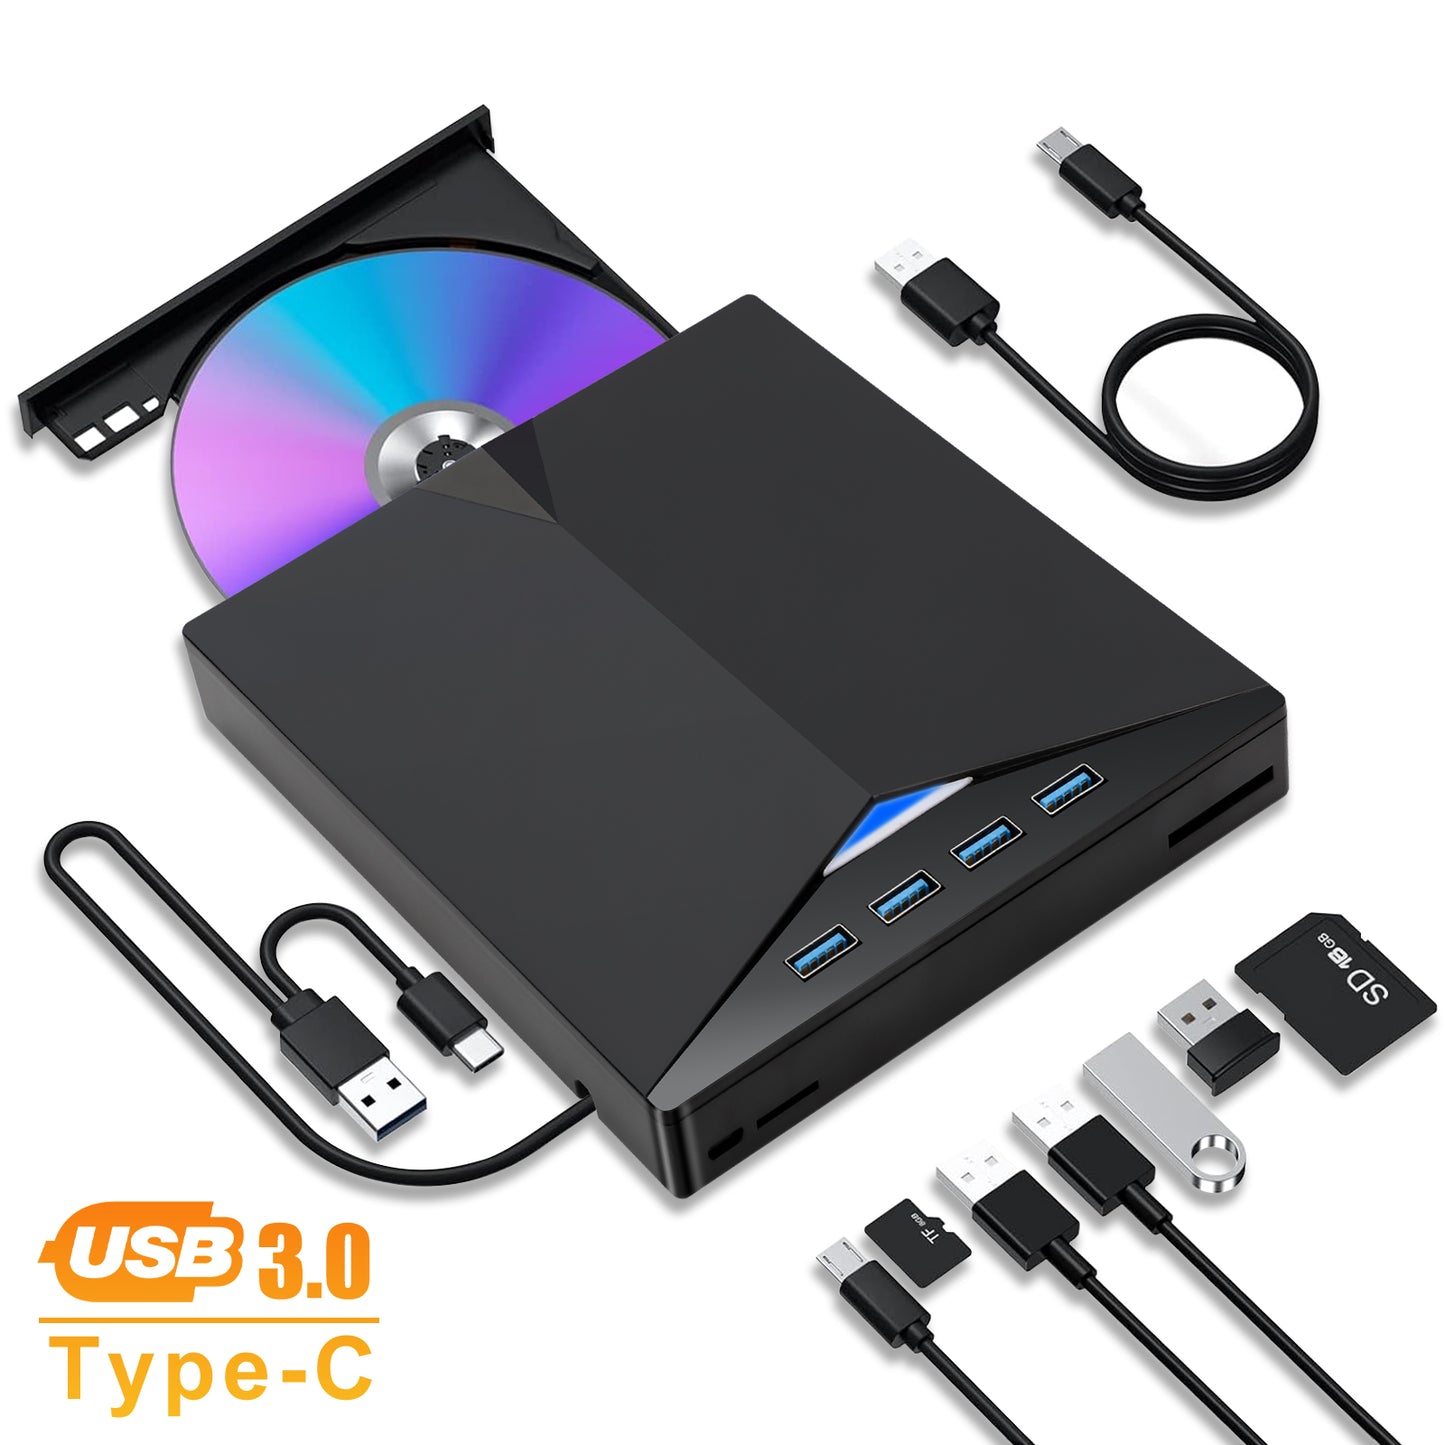 7 in 1 USB 3.0 Multi-function External CD/DVD Drive - Type-C CD/DVD +/-RW Player Reader Writer Burner, 4 USB Ports, Support SD/TF Card, Optical CD DVD Drive  (Black)